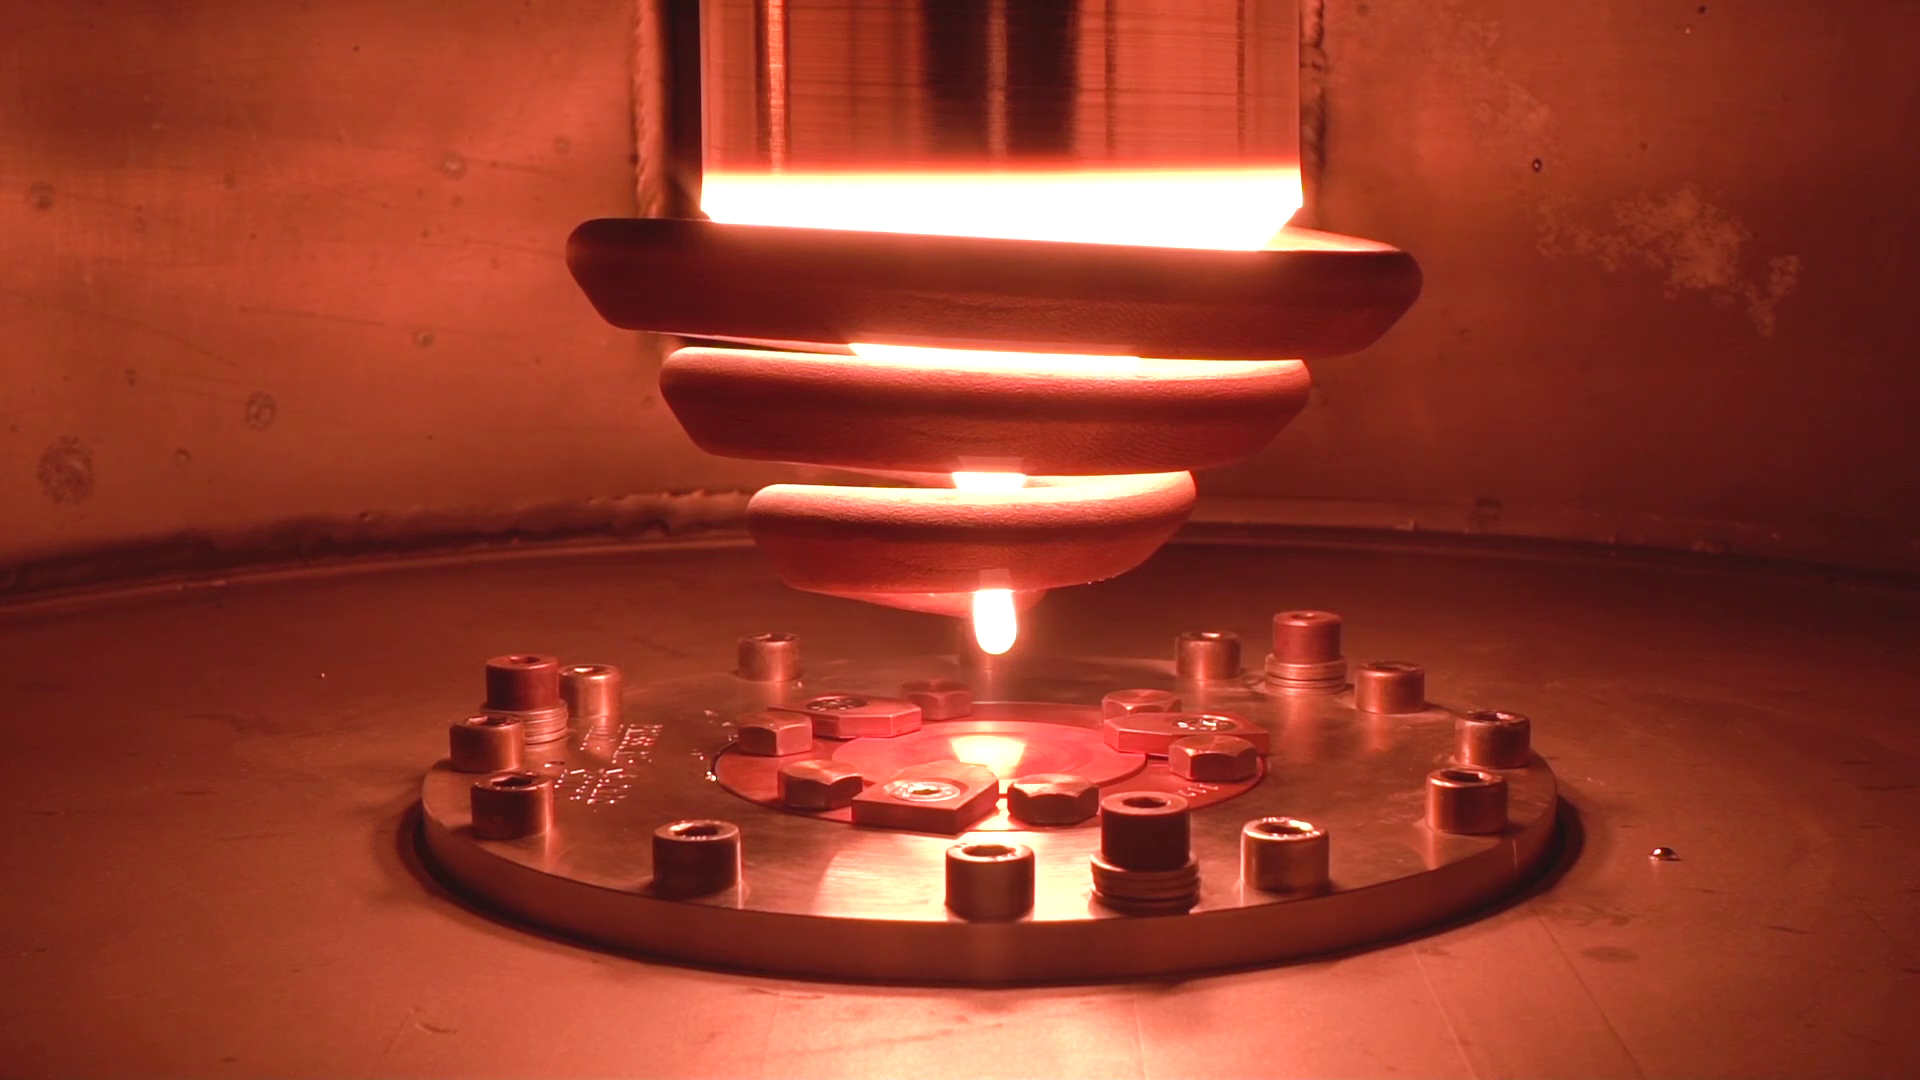 Heating a titanium rod at Sandvik’s powder plant for titanium and nickel-based superalloys.